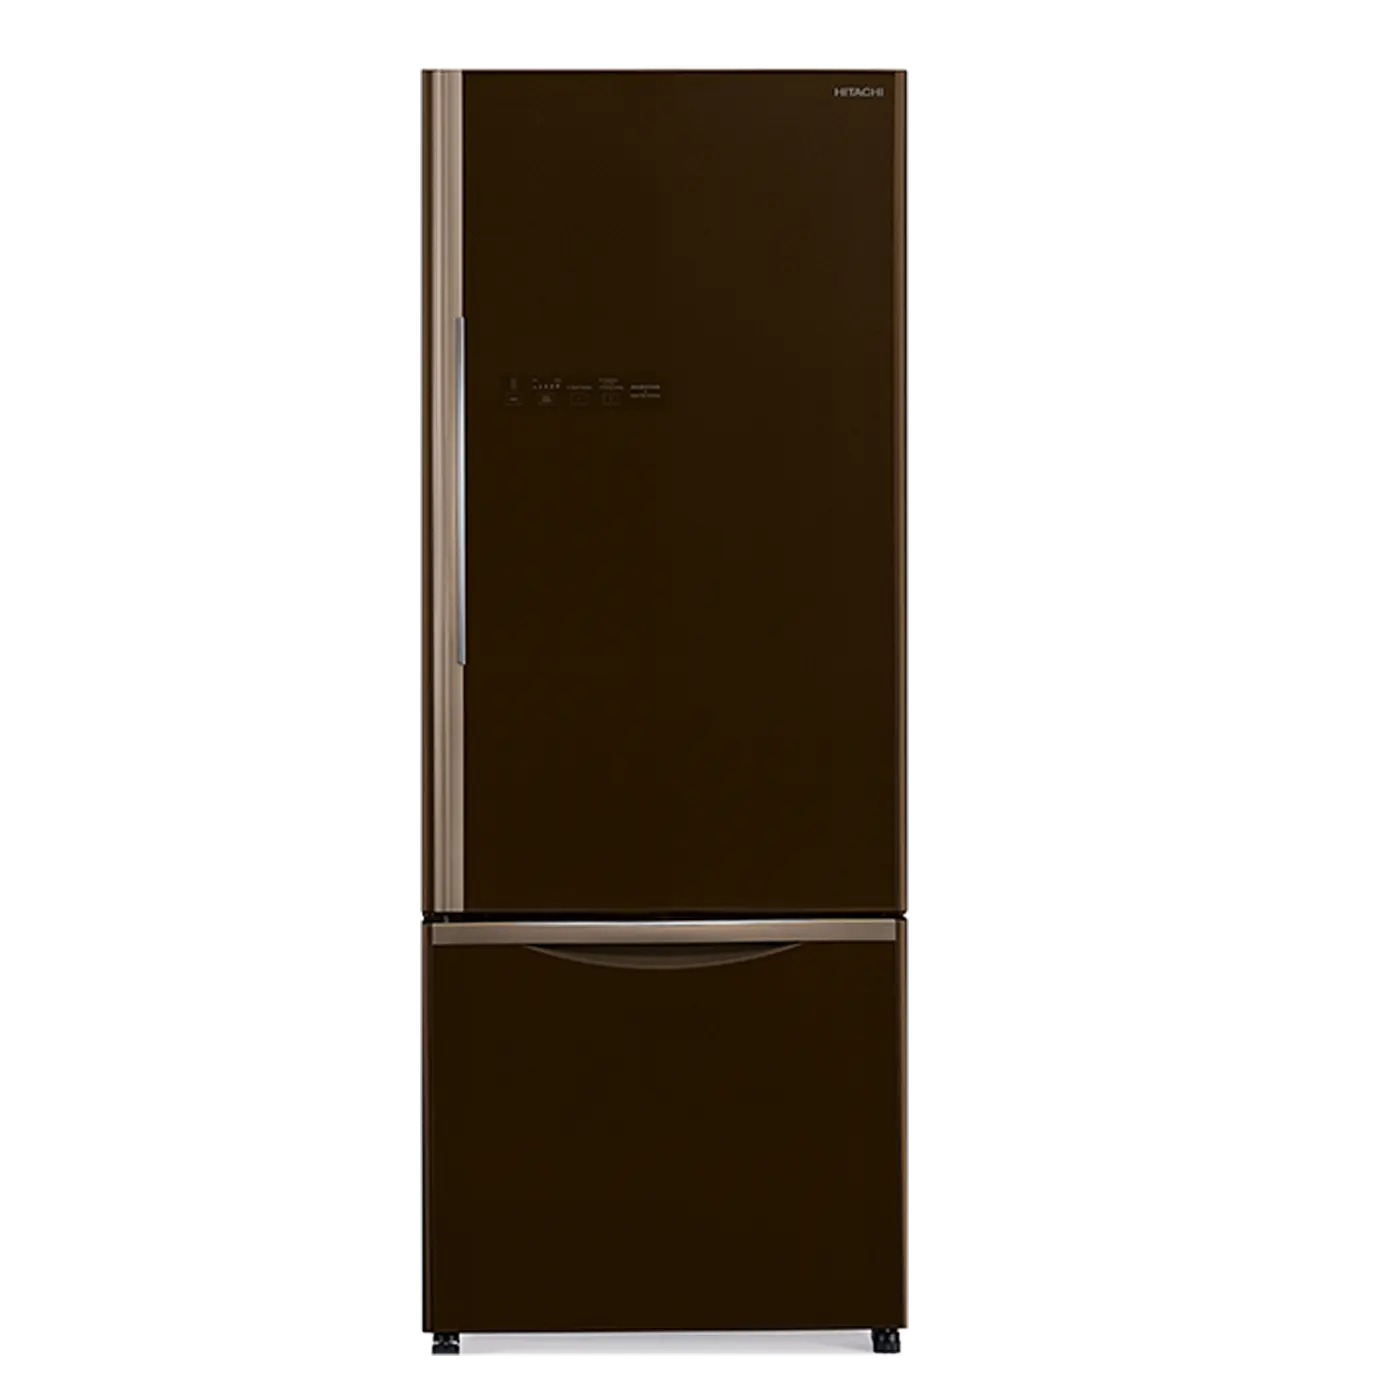 HITACHI - Bottom Freezer (2 Door) - 466 LTR R-B500PND6 -GBK